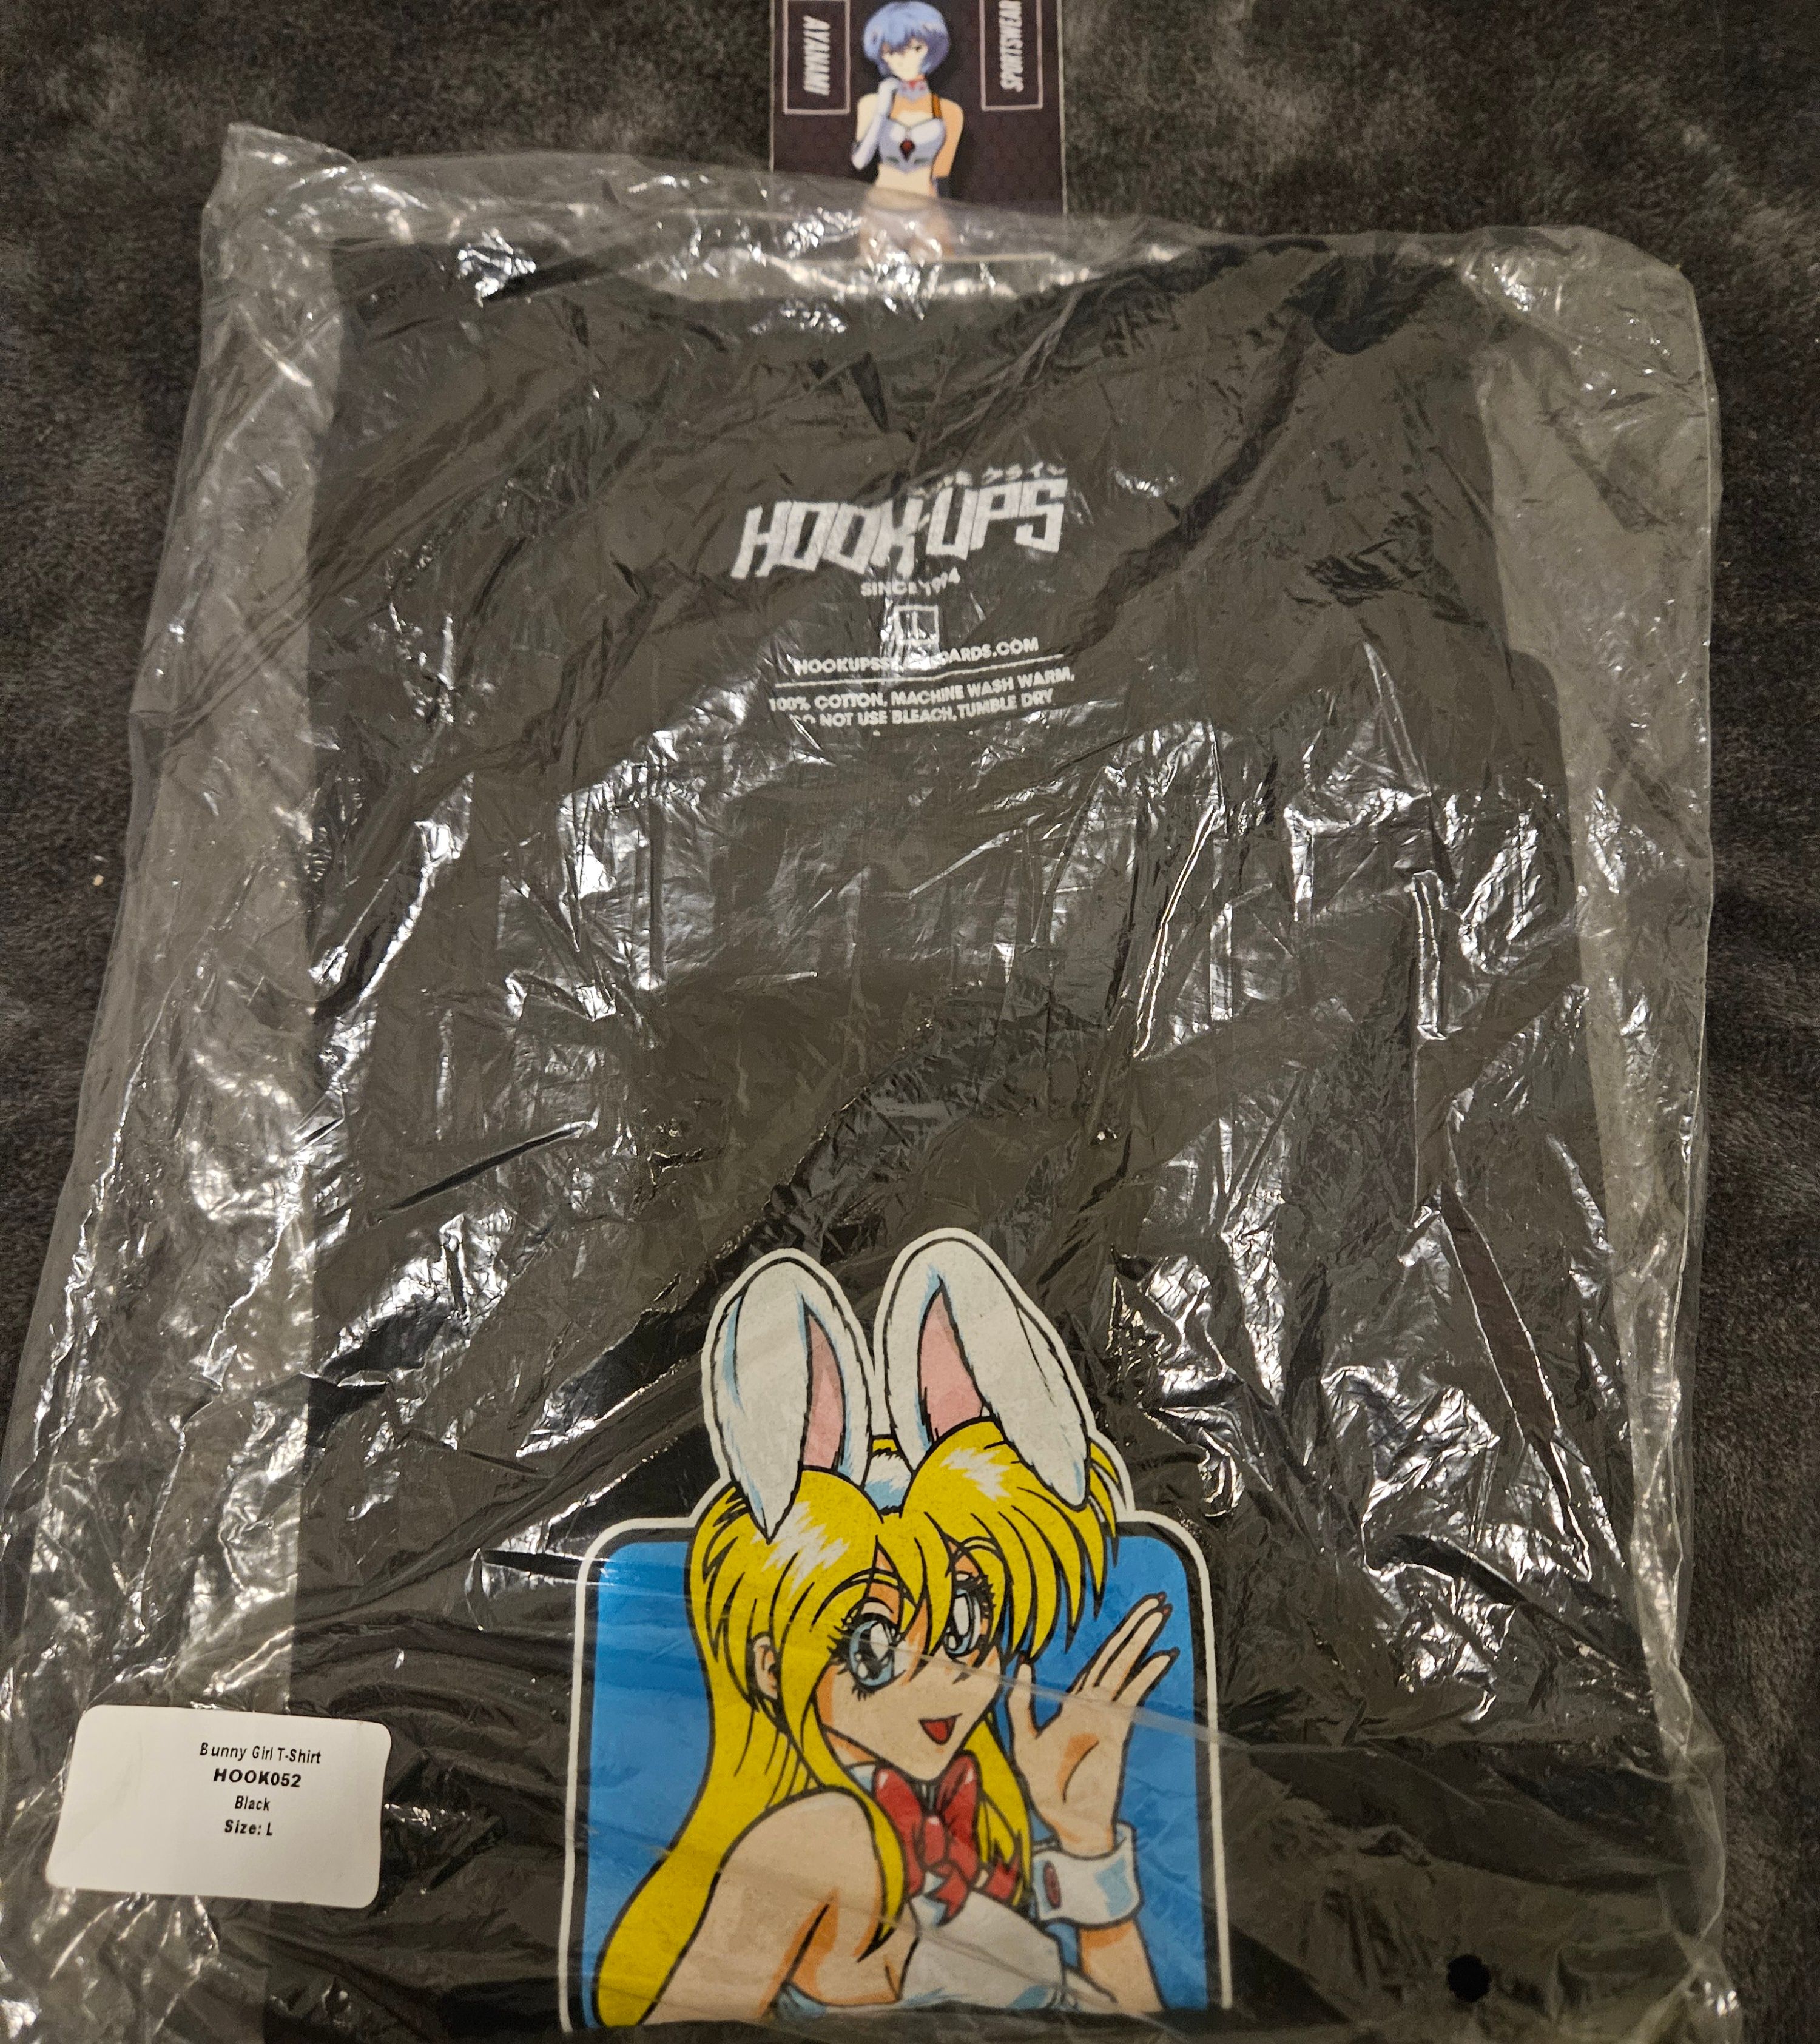 Hook-Ups Bunny Girl T-Shirt